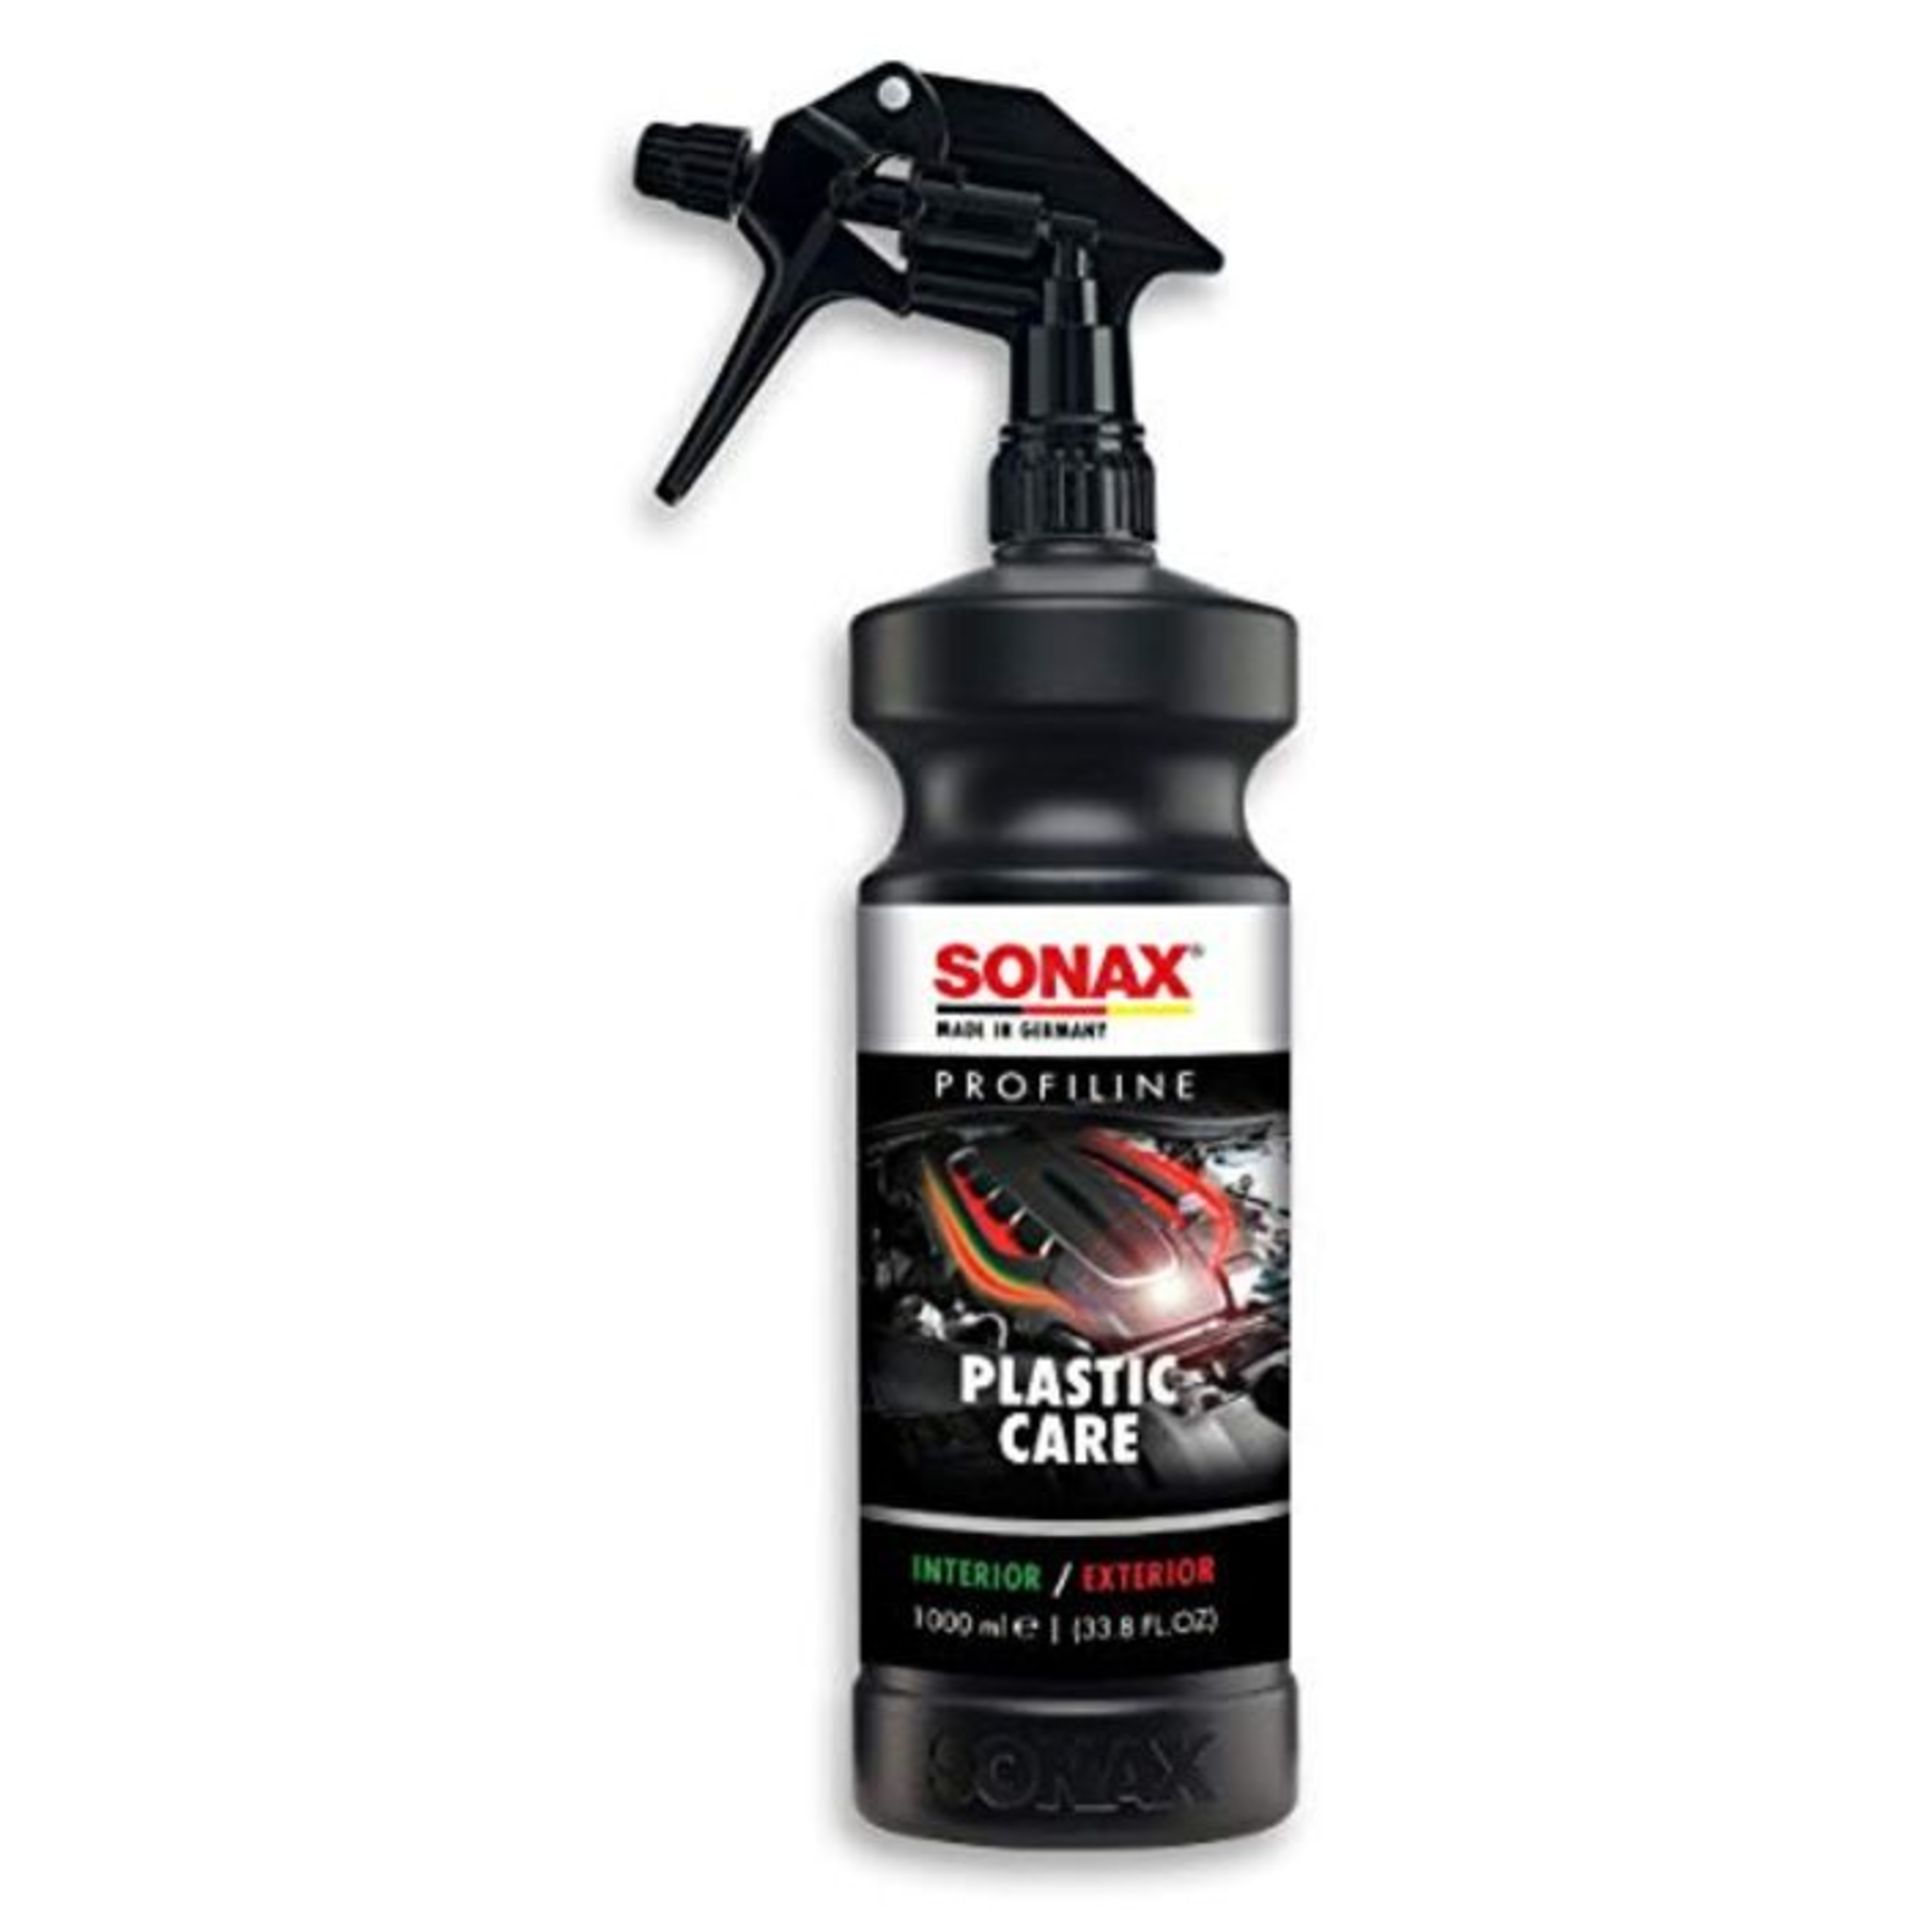 SONAX PROFILINE Plasticcare (1 Litre) - Regenerative and Protective Plastic Care. Rest